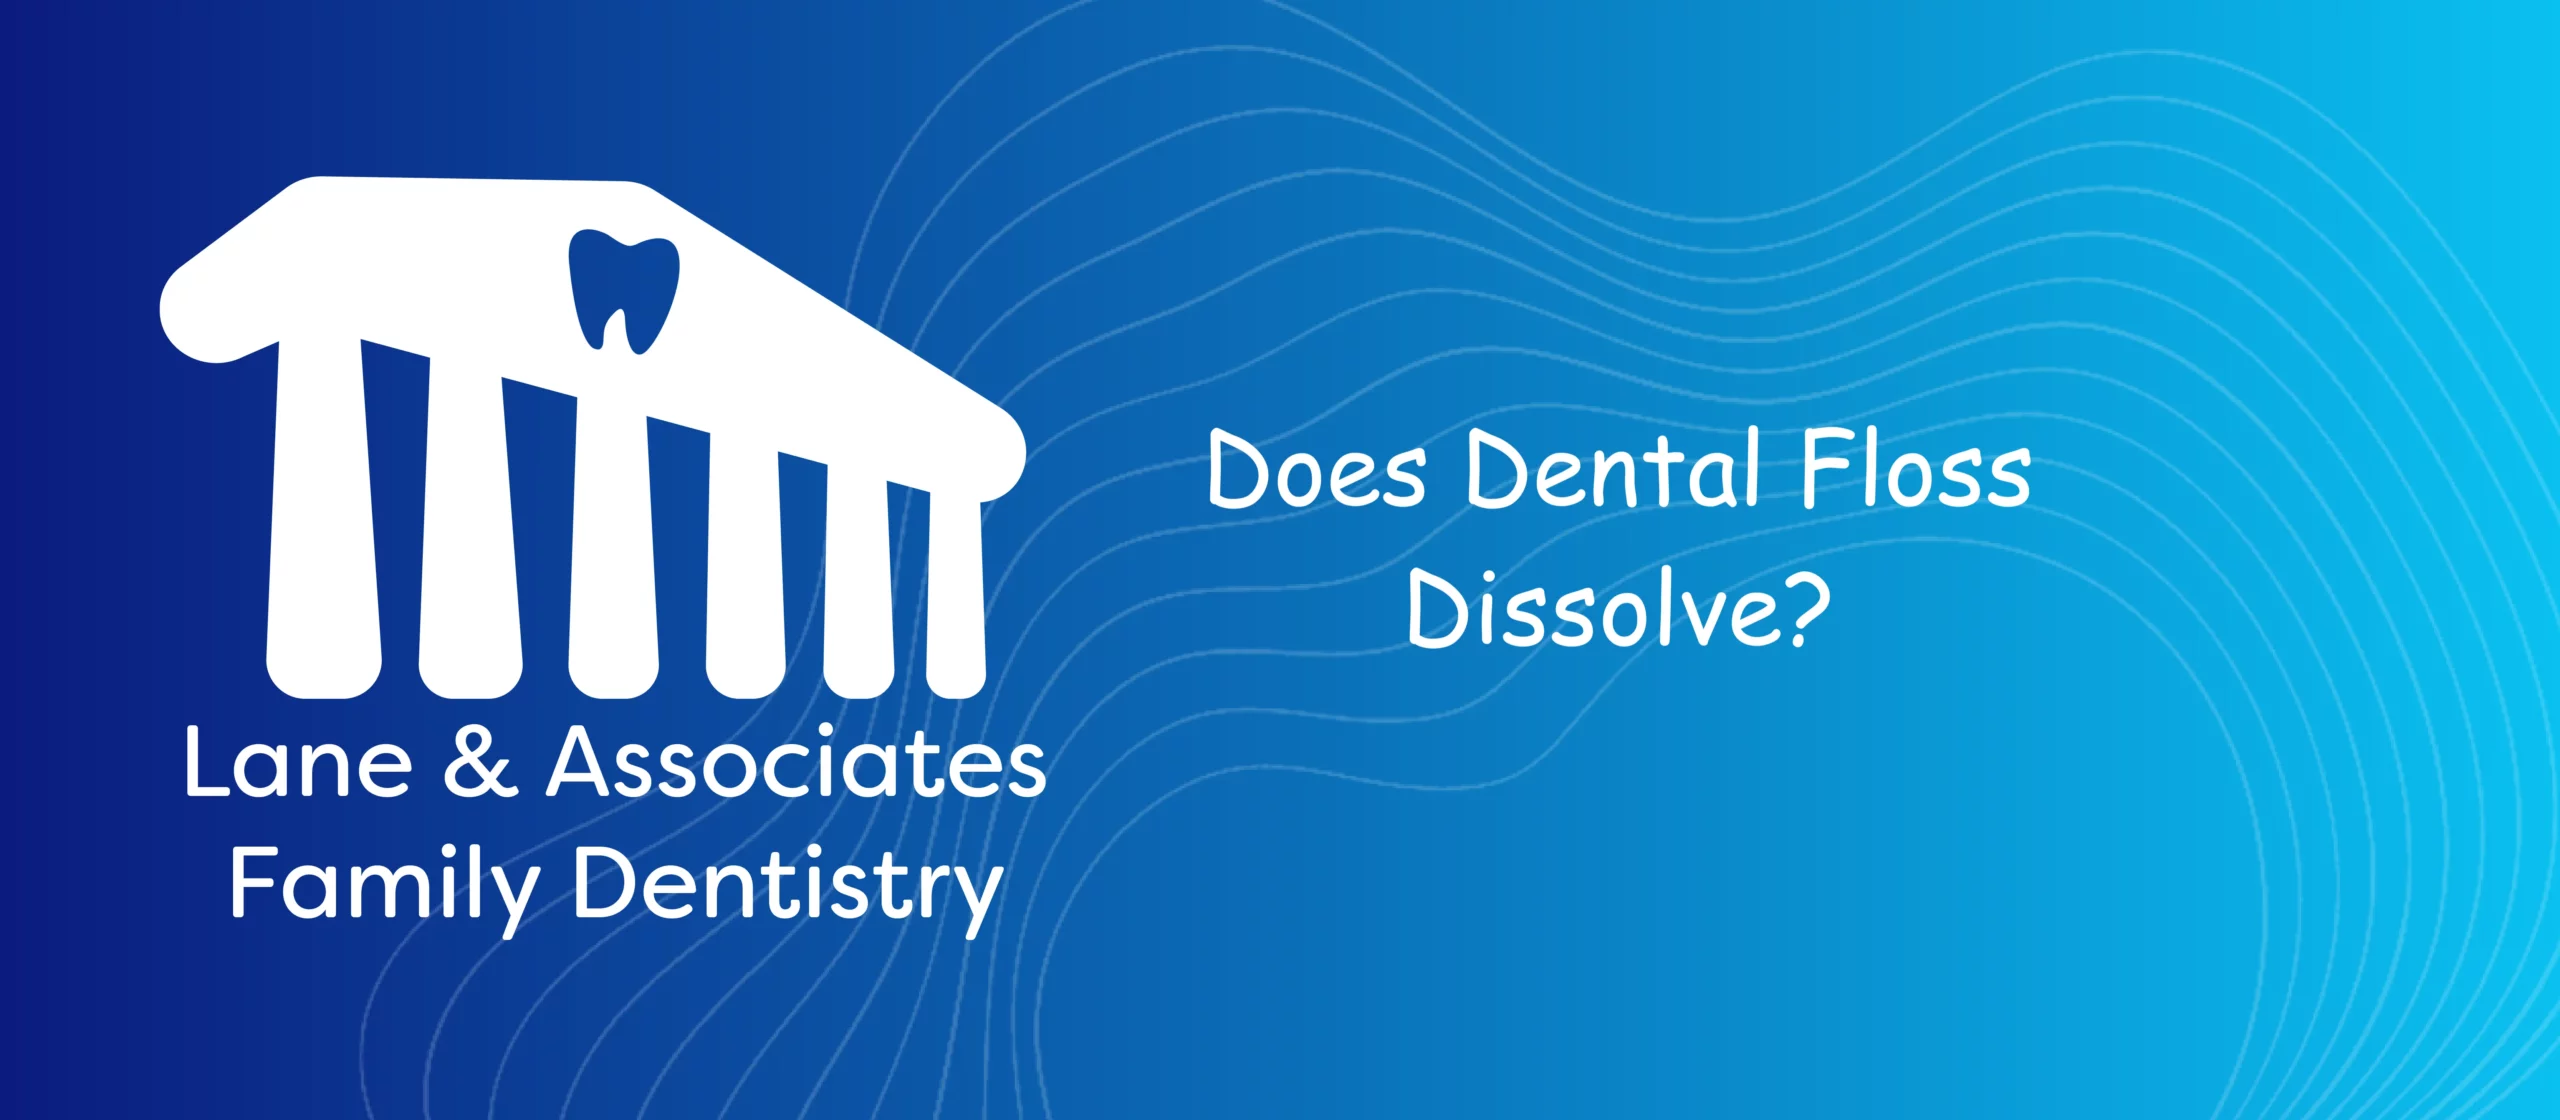 Does Dental Floss Dissolve?